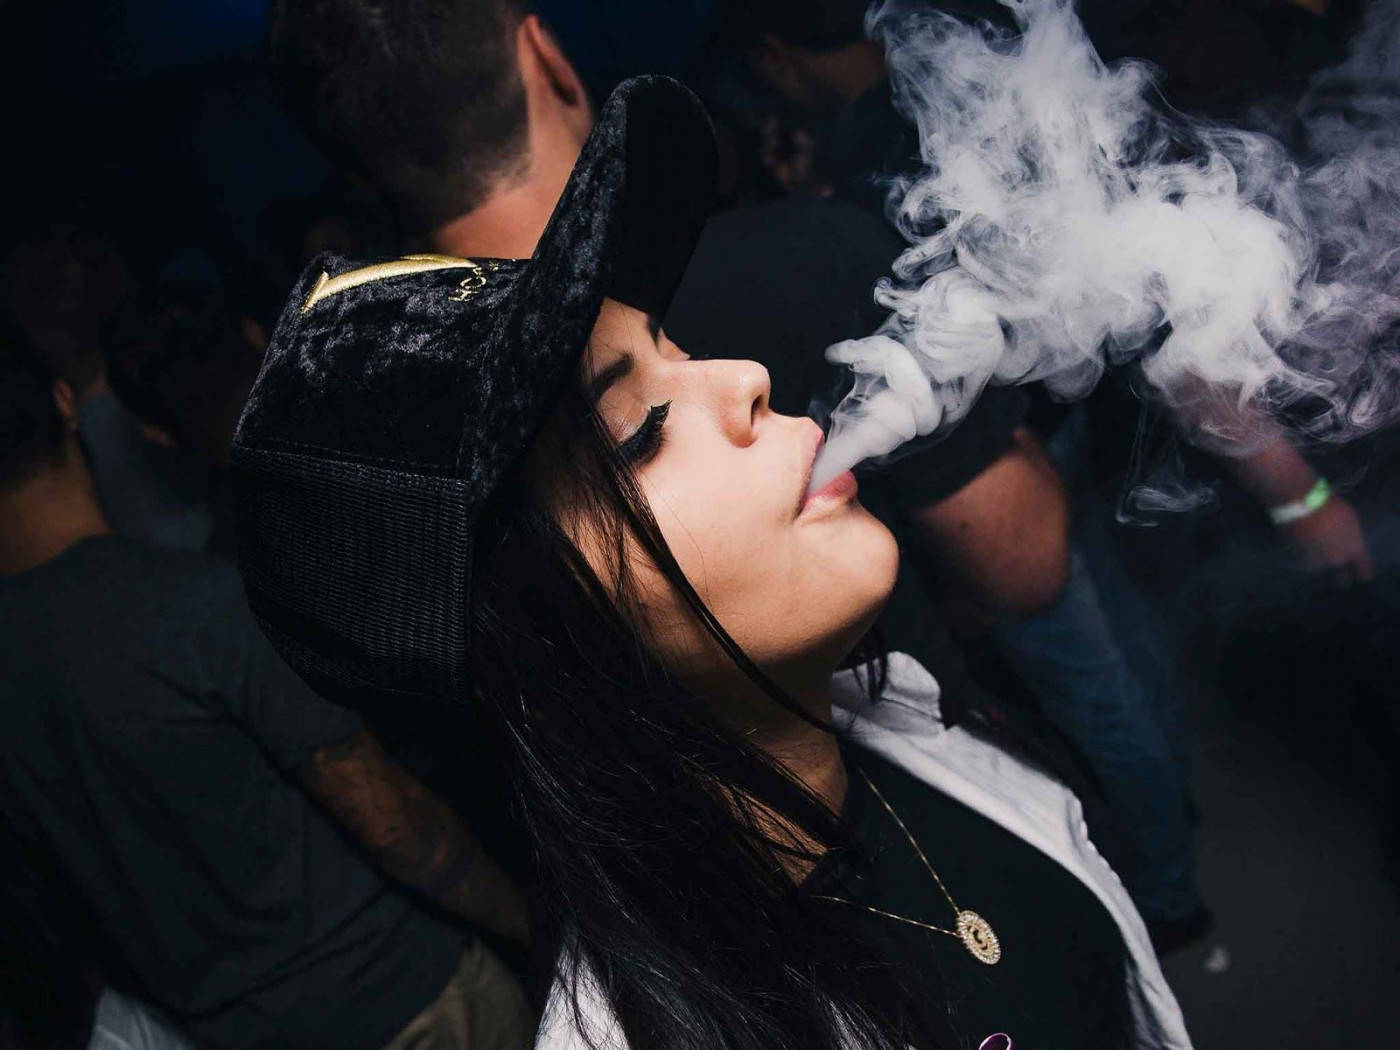 Attitude Girl Exhaling Smoke Wallpaper